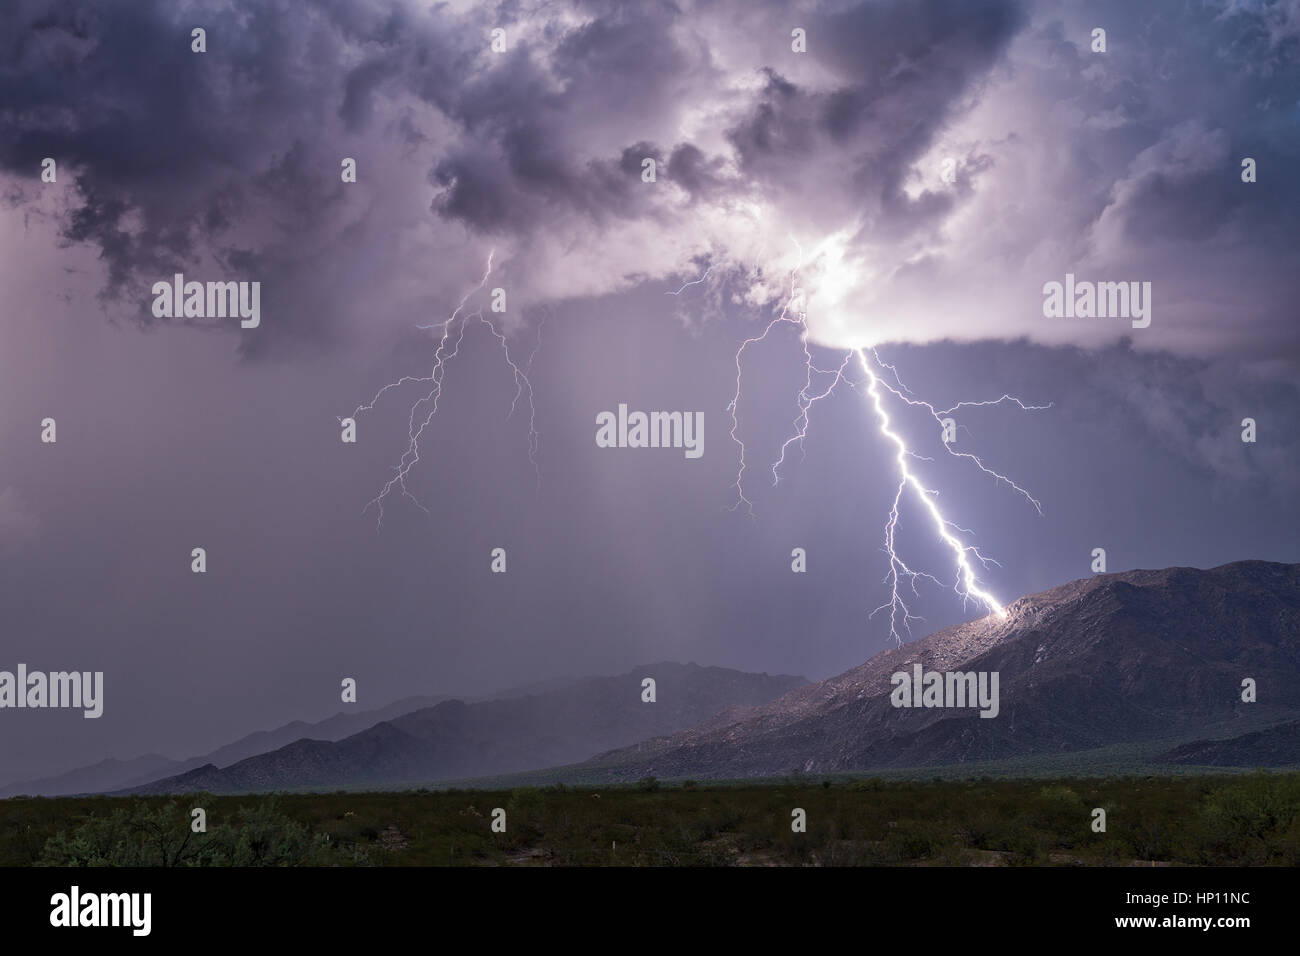 Lightning bolt striking a mountain in a storm near Aguila, Arizona Stock Photo